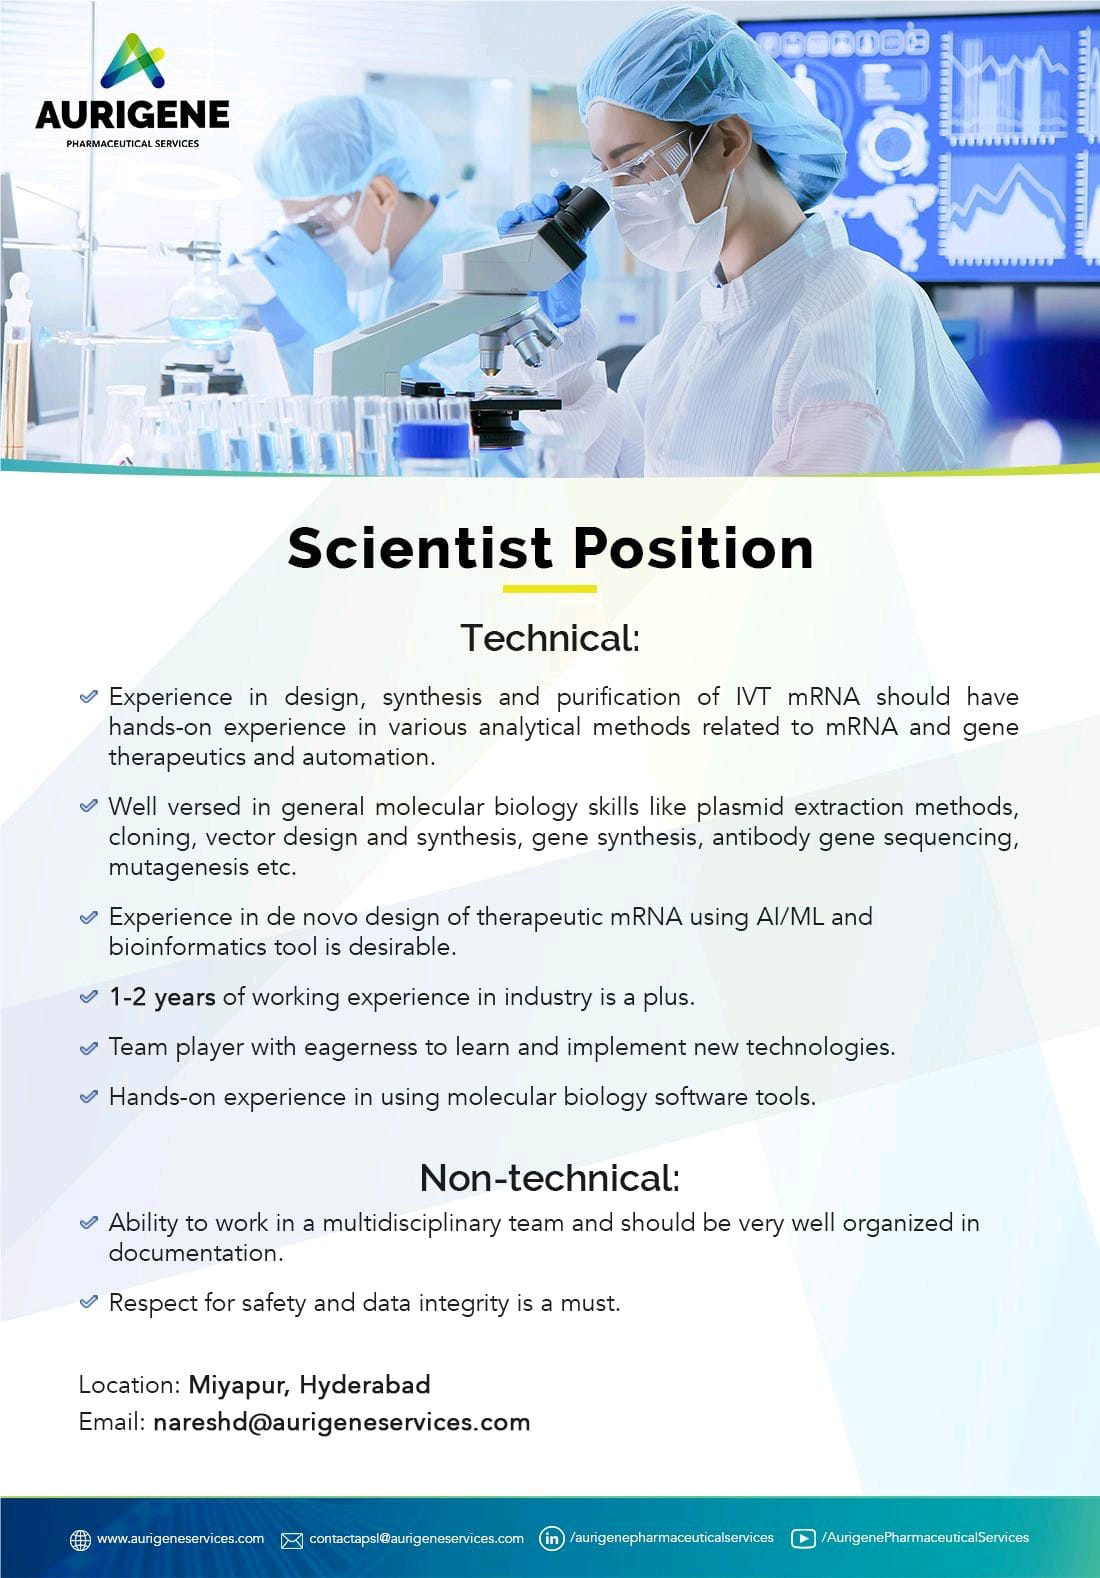 Job Availables,Aurigene Pharmaceuticals Services Job Vacancy For Scientist Position